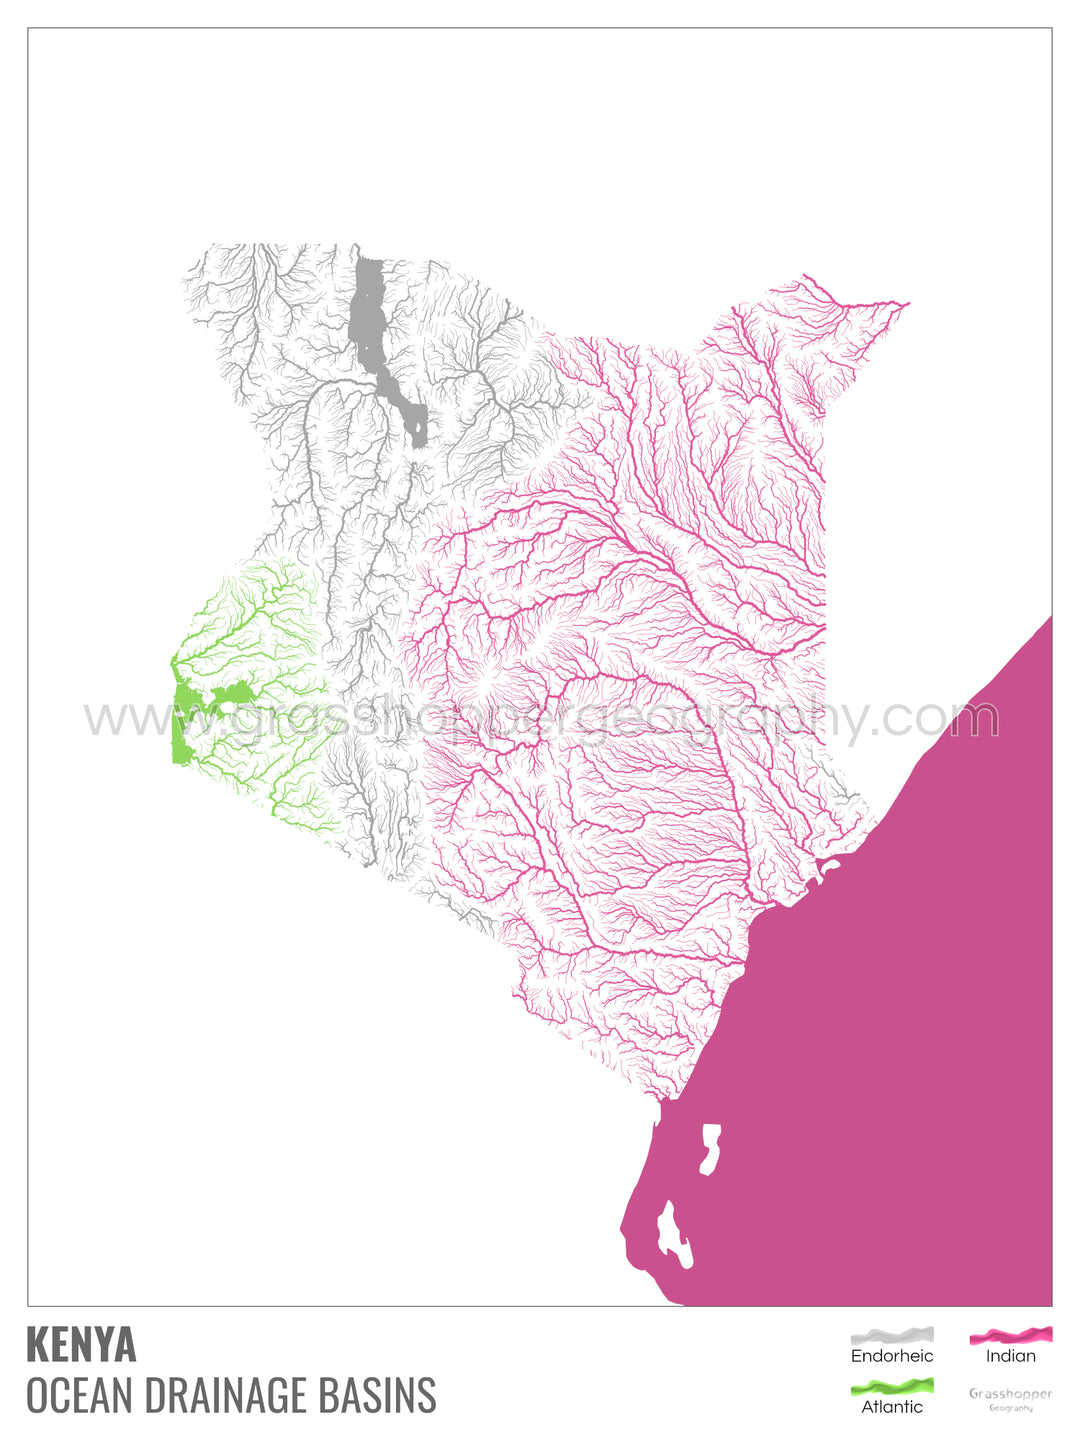 Kenya - Carte du bassin versant océanique, blanche avec légende v2 - Impression encadrée